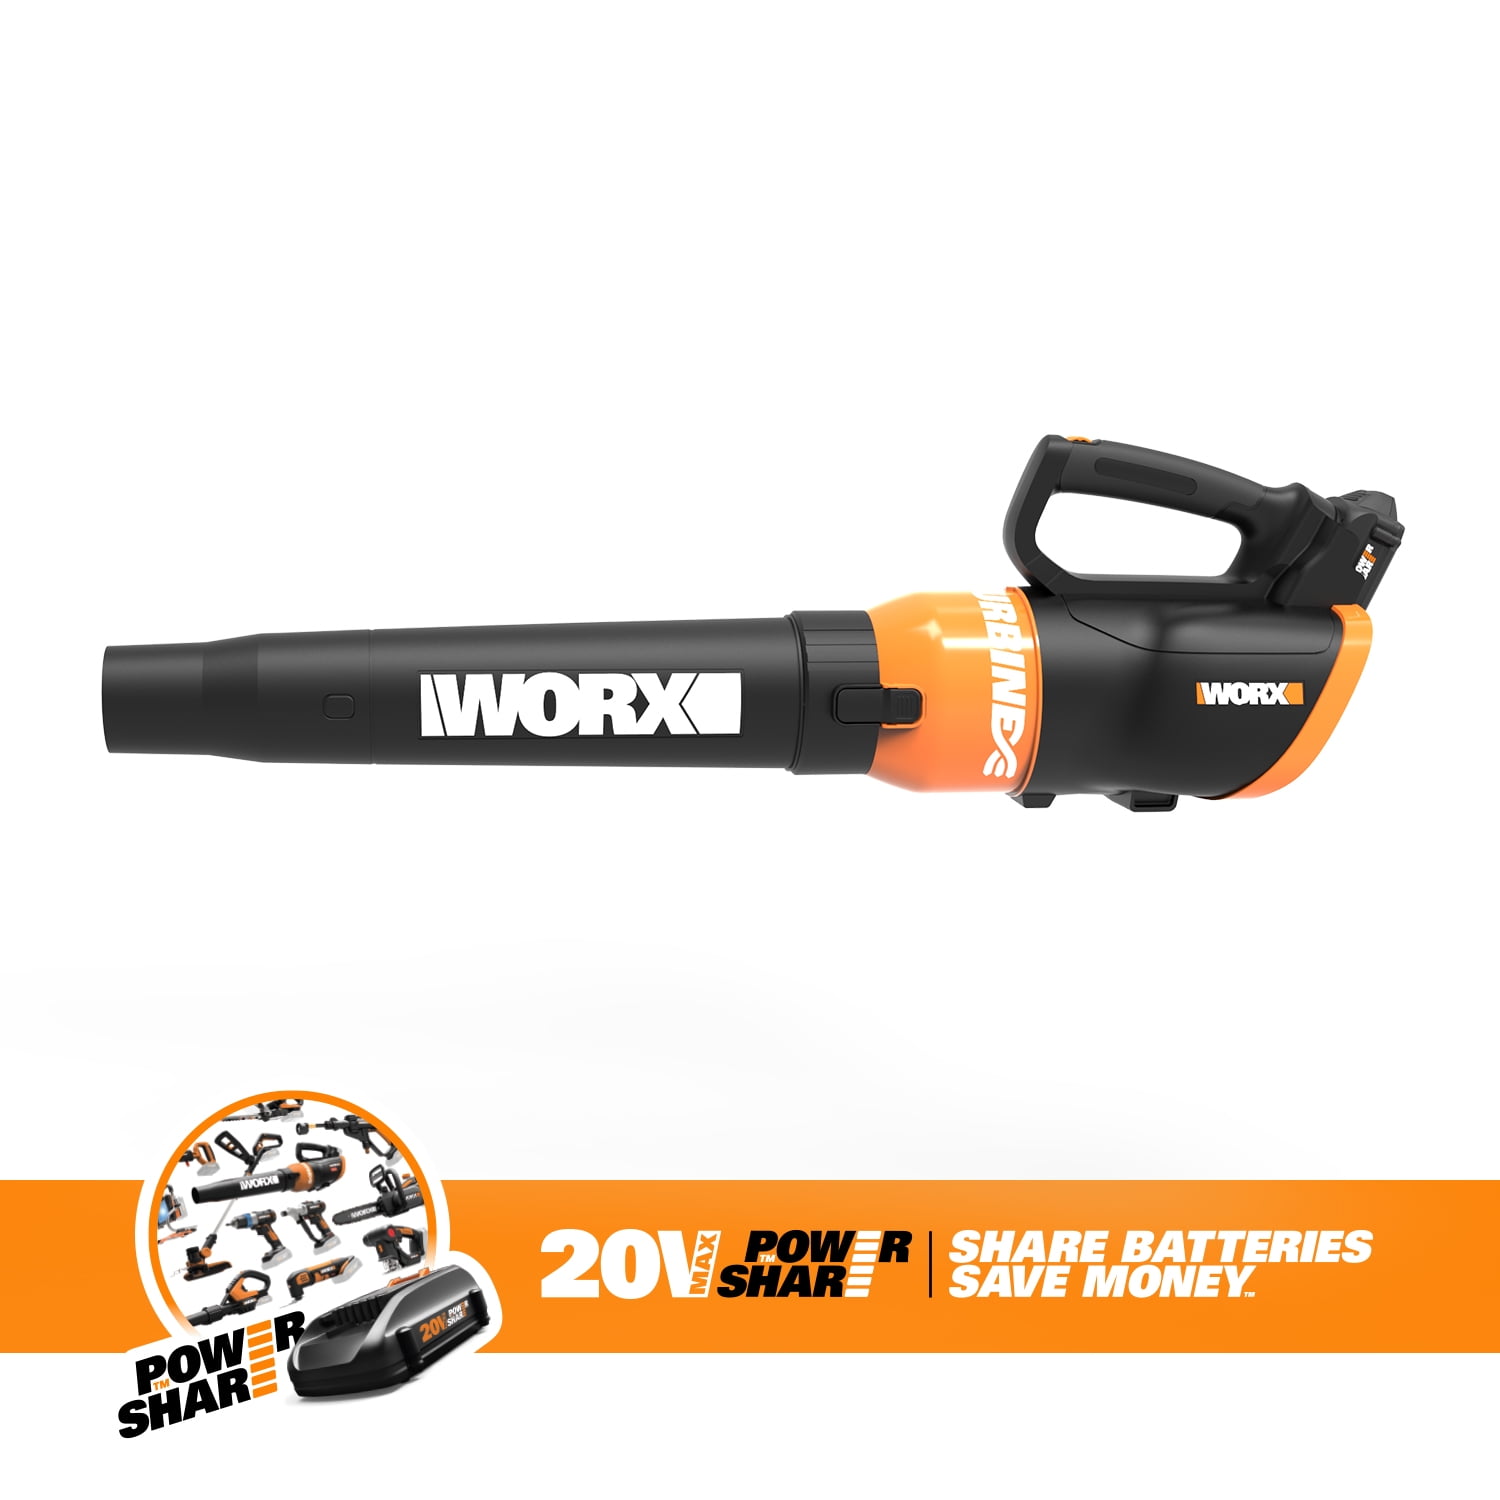 Worx 20-Volt Cordless Battery Powered Blower/Sweeper